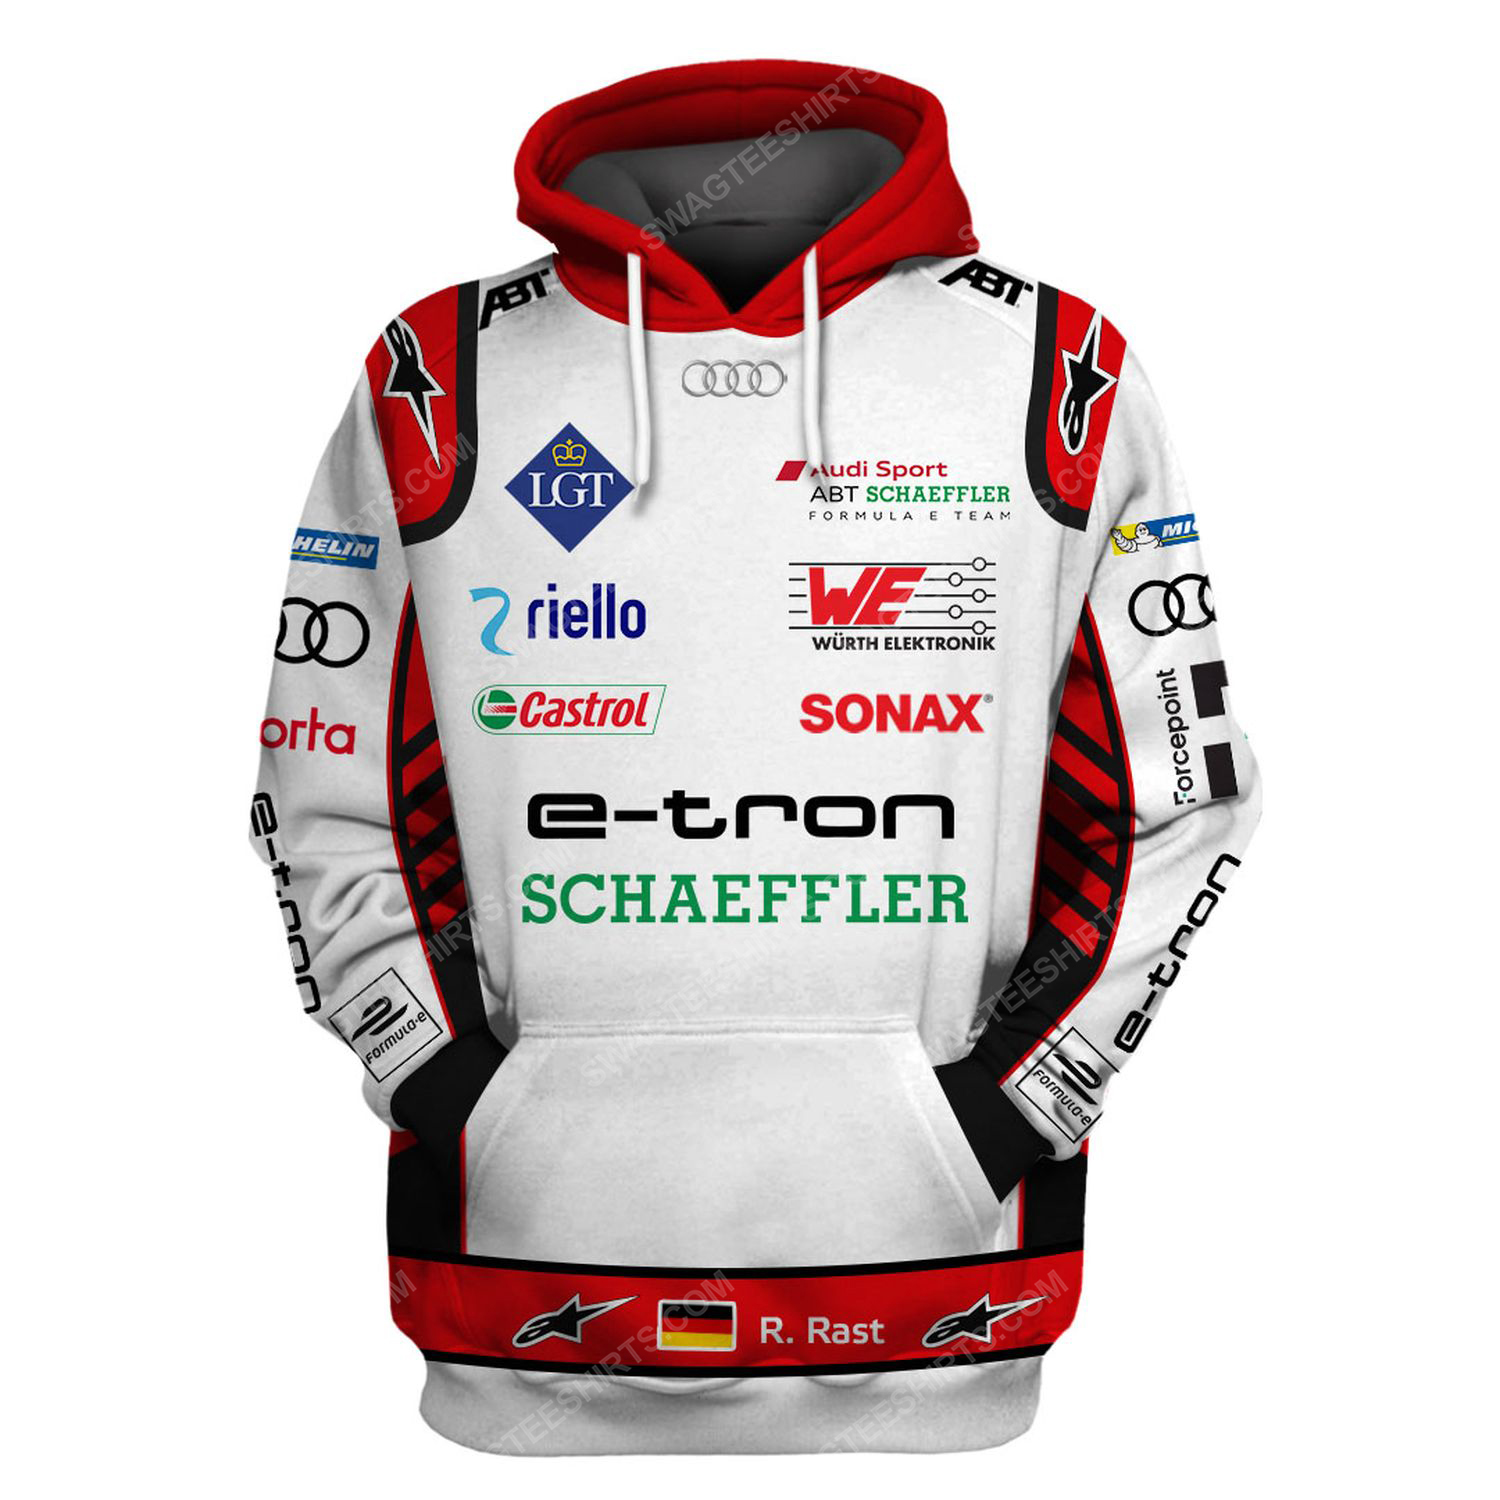 [special edition] Audi e-tron schwarzer racing team motorsport full printing shirt – maria